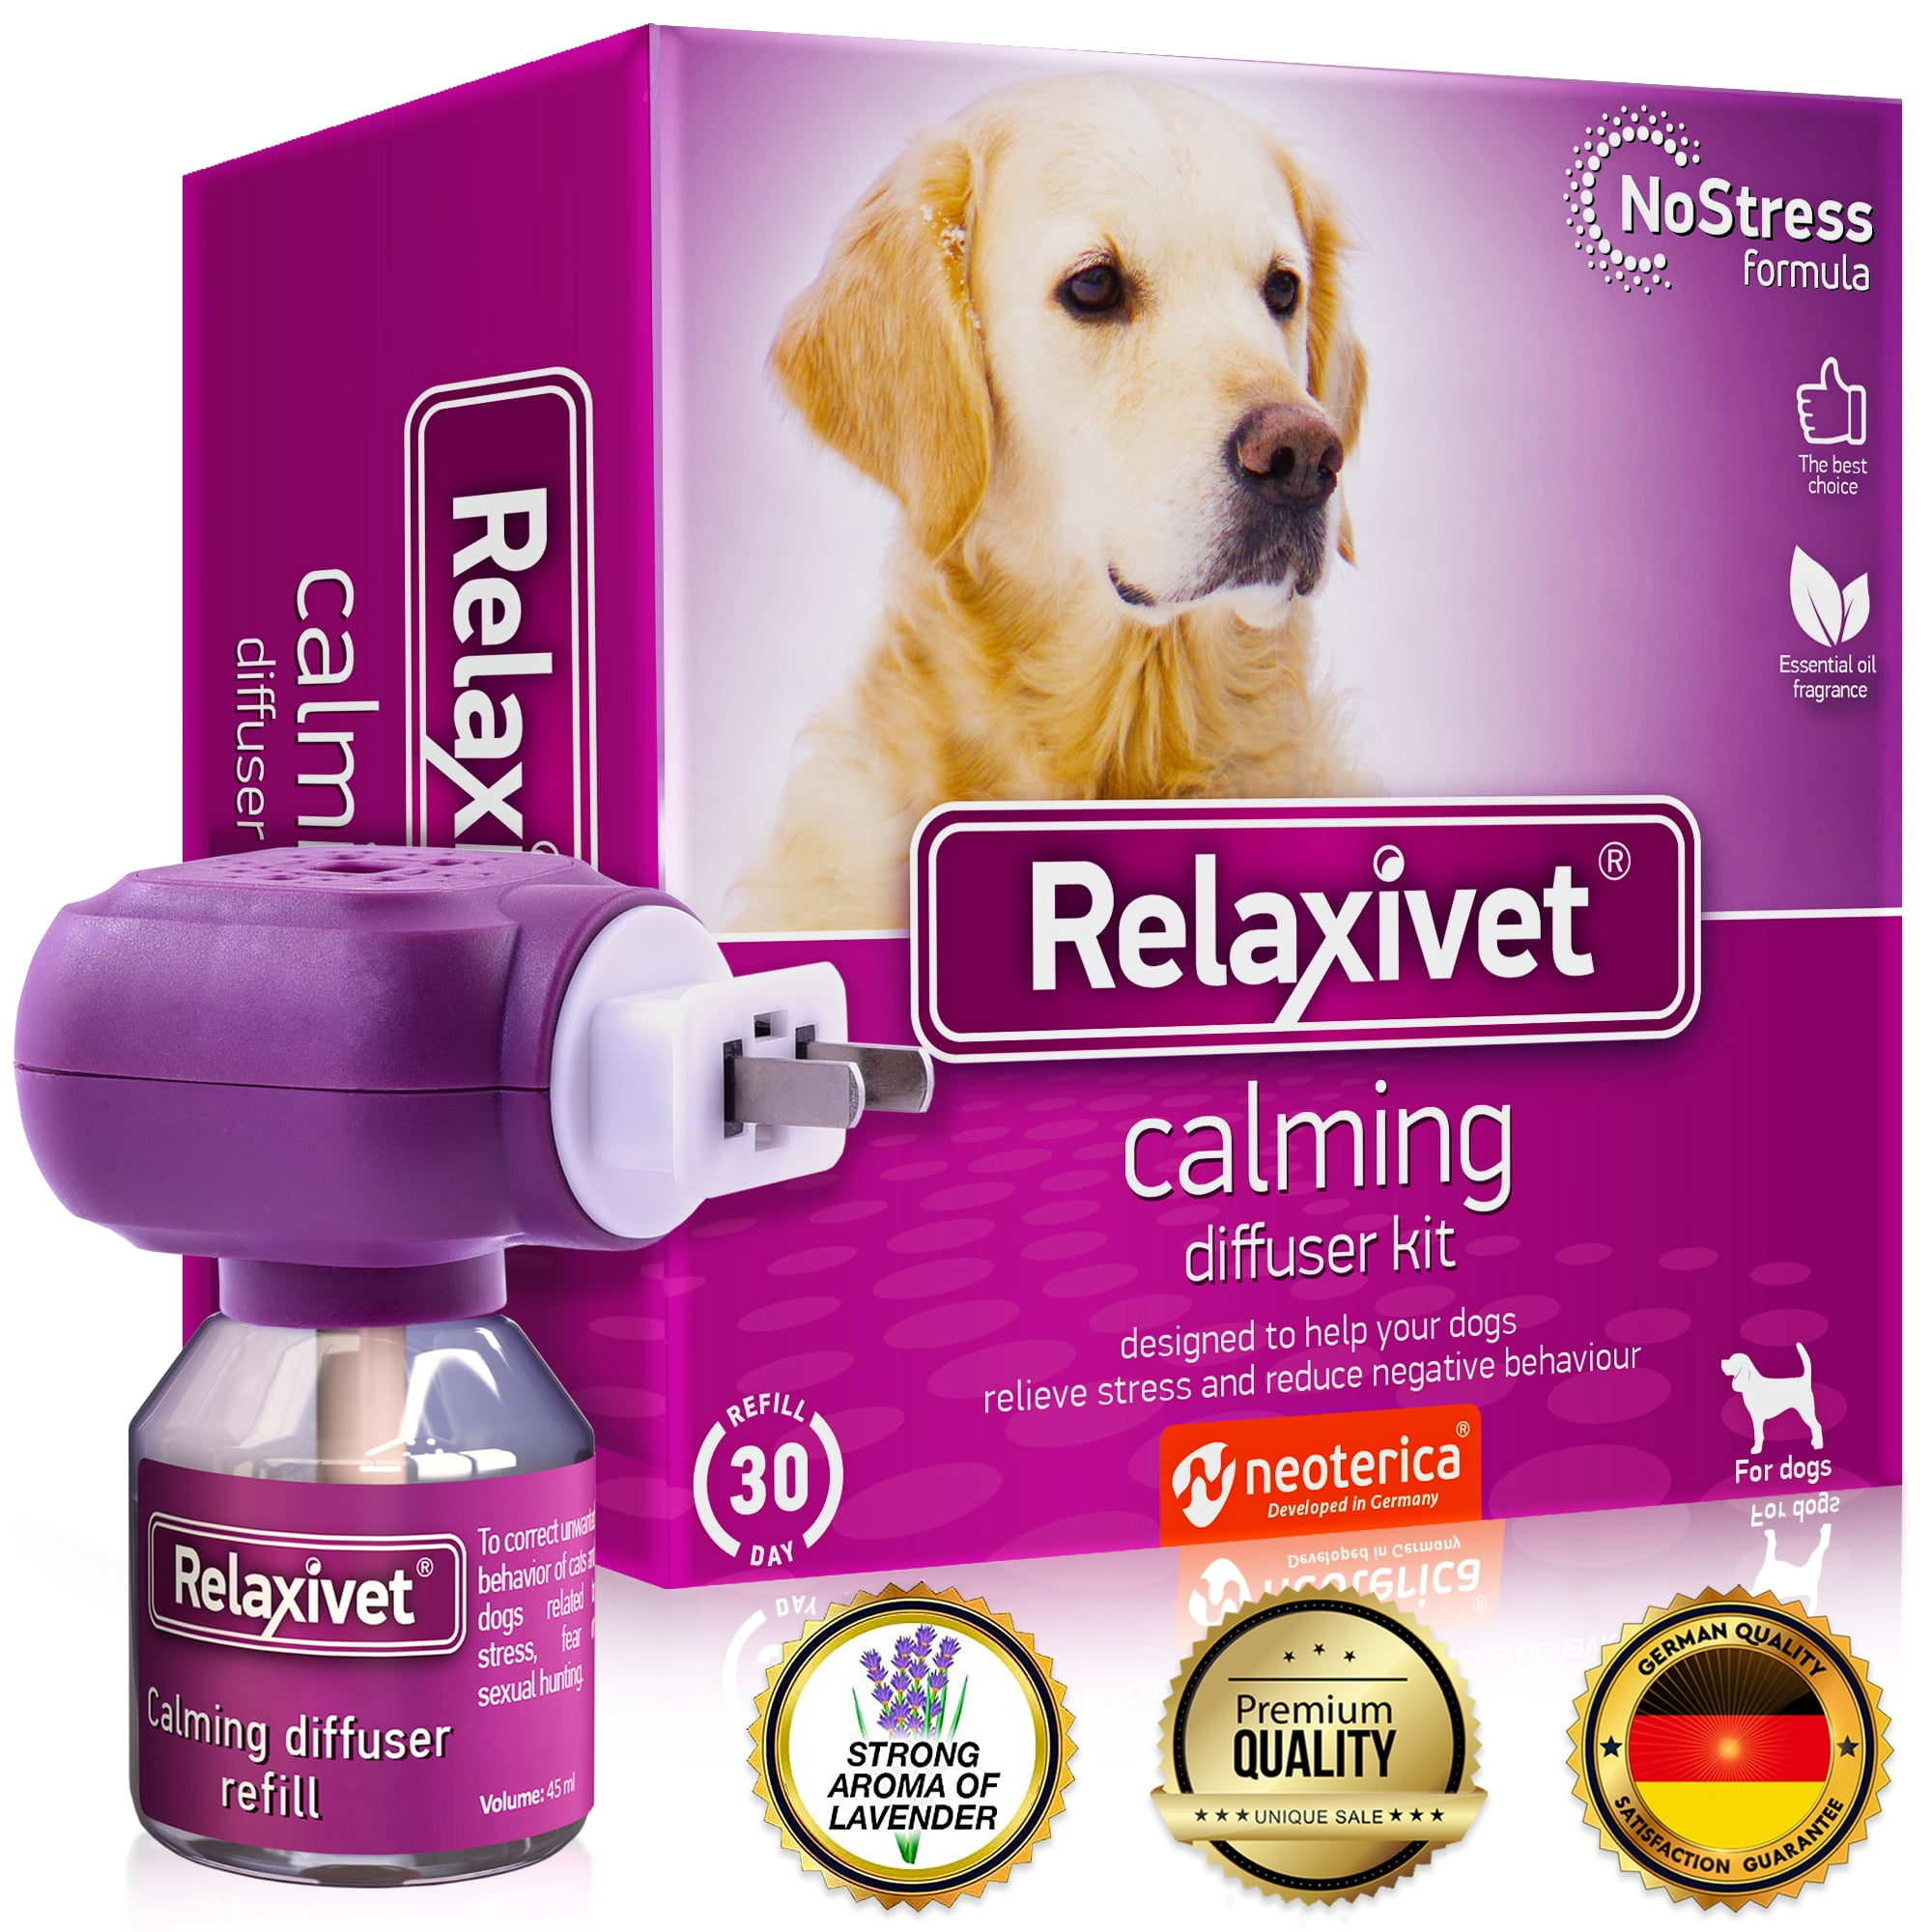 Relaxivet Dog Calming Pheromone Diffuser Improved NoStress Formula